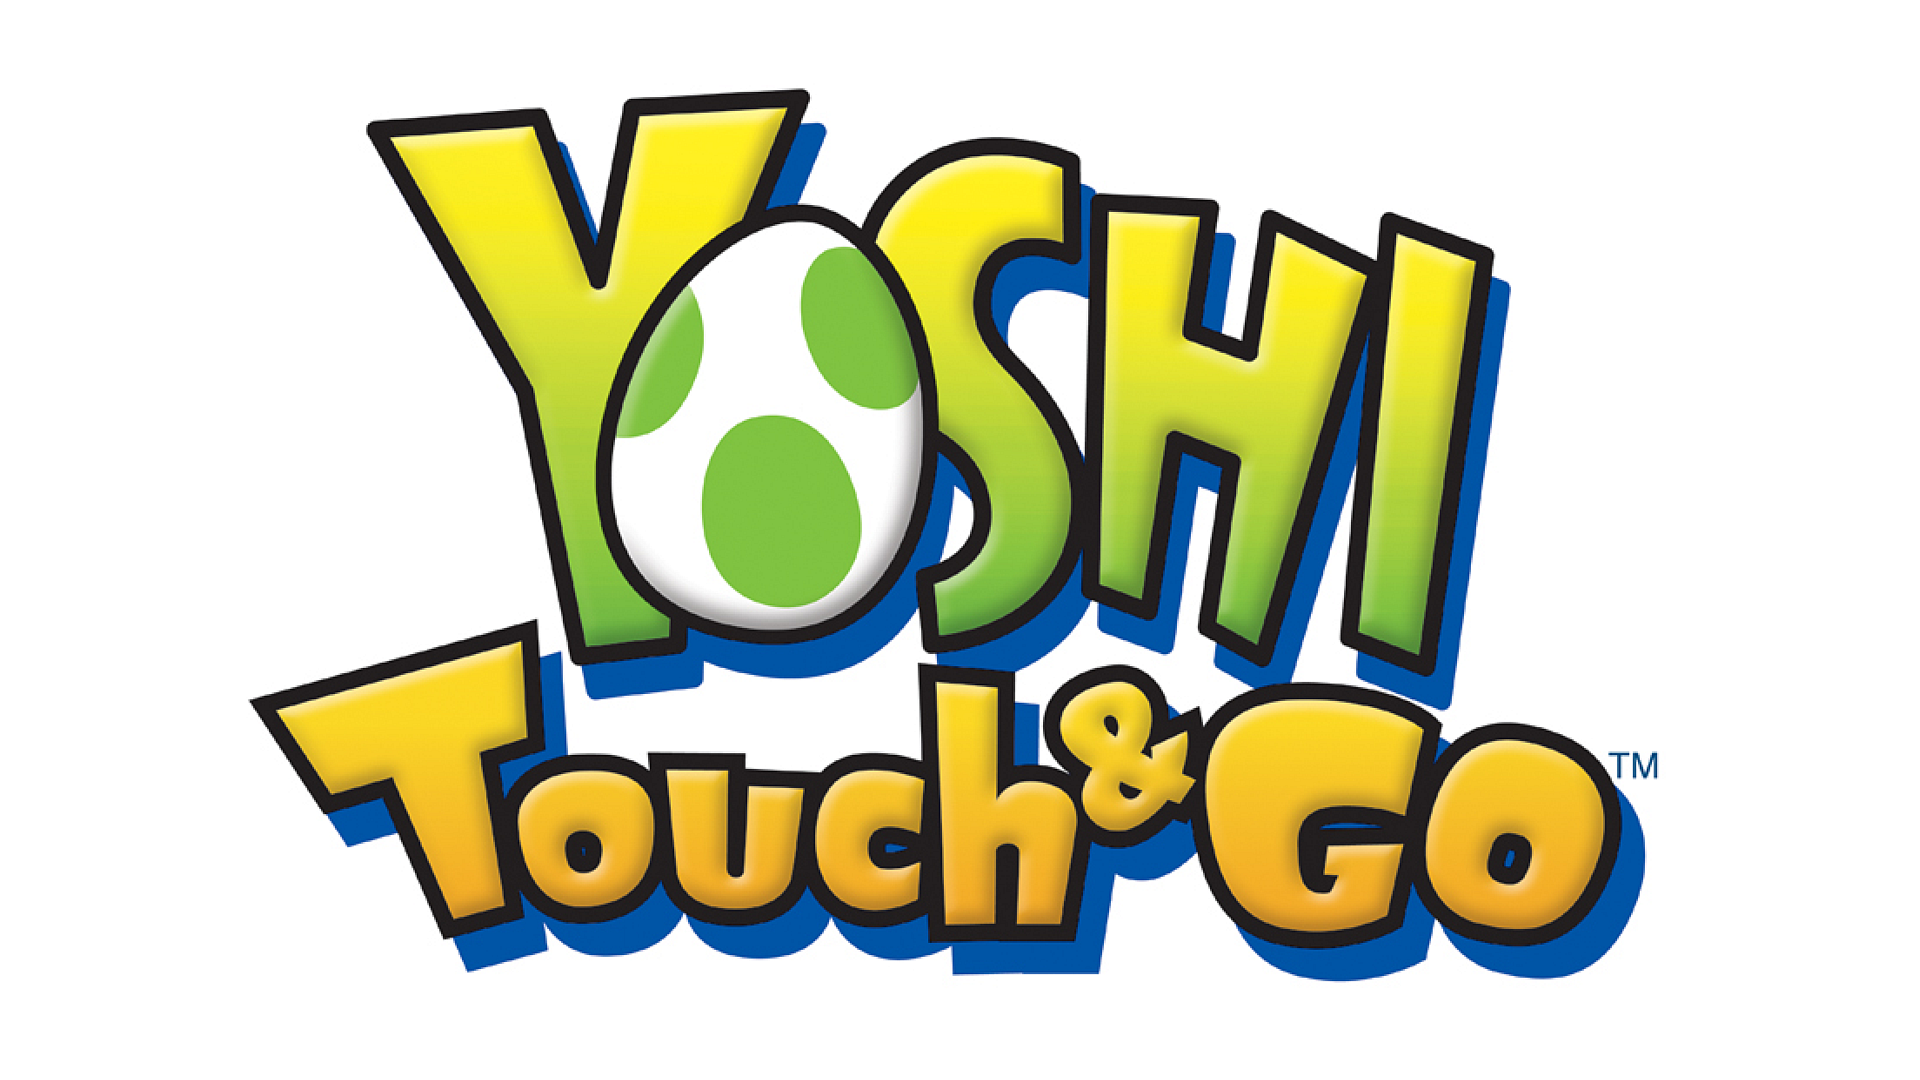 Yoshi Touch & Go Logo